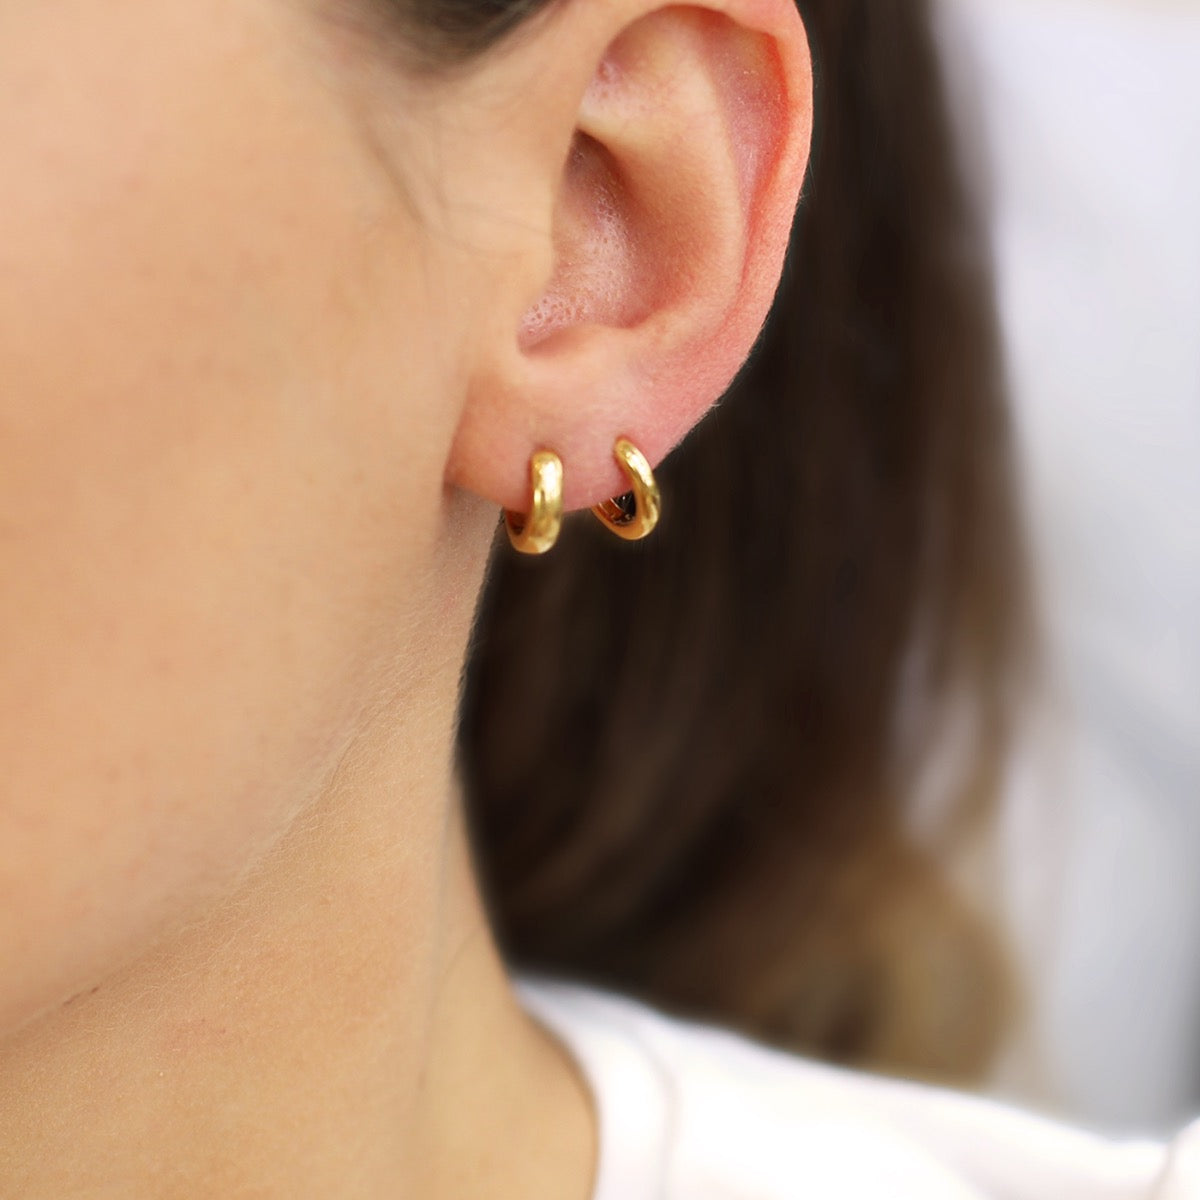 Buy Gold-Toned Earrings for Women by Sohi Online | Ajio.com